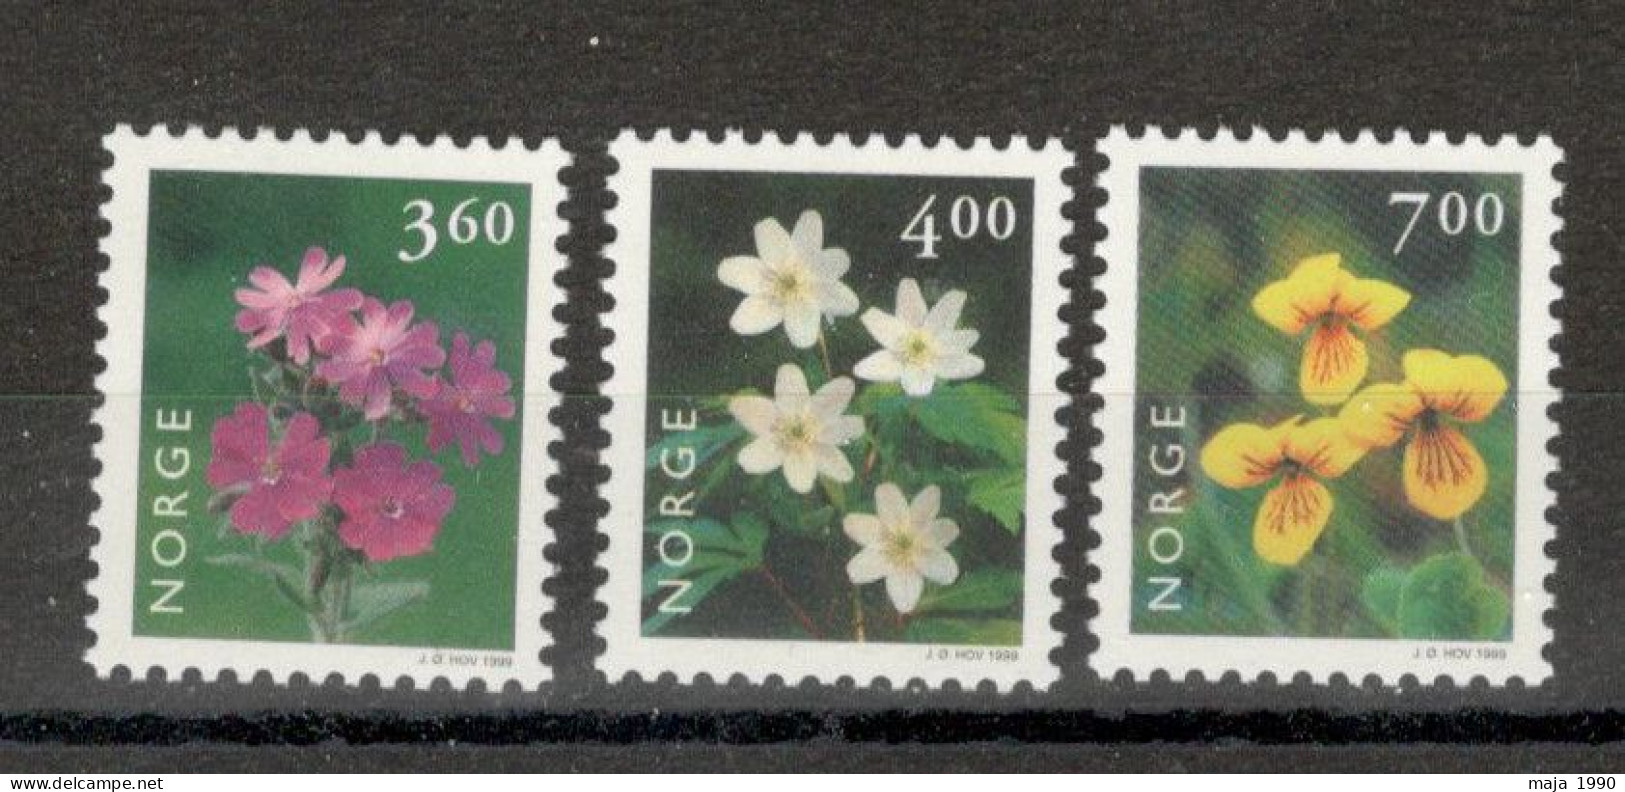 NORWAY - MNH SET - FLORA - FLOWERS - Mi.No. 1303/05 - 1999. - Unused Stamps